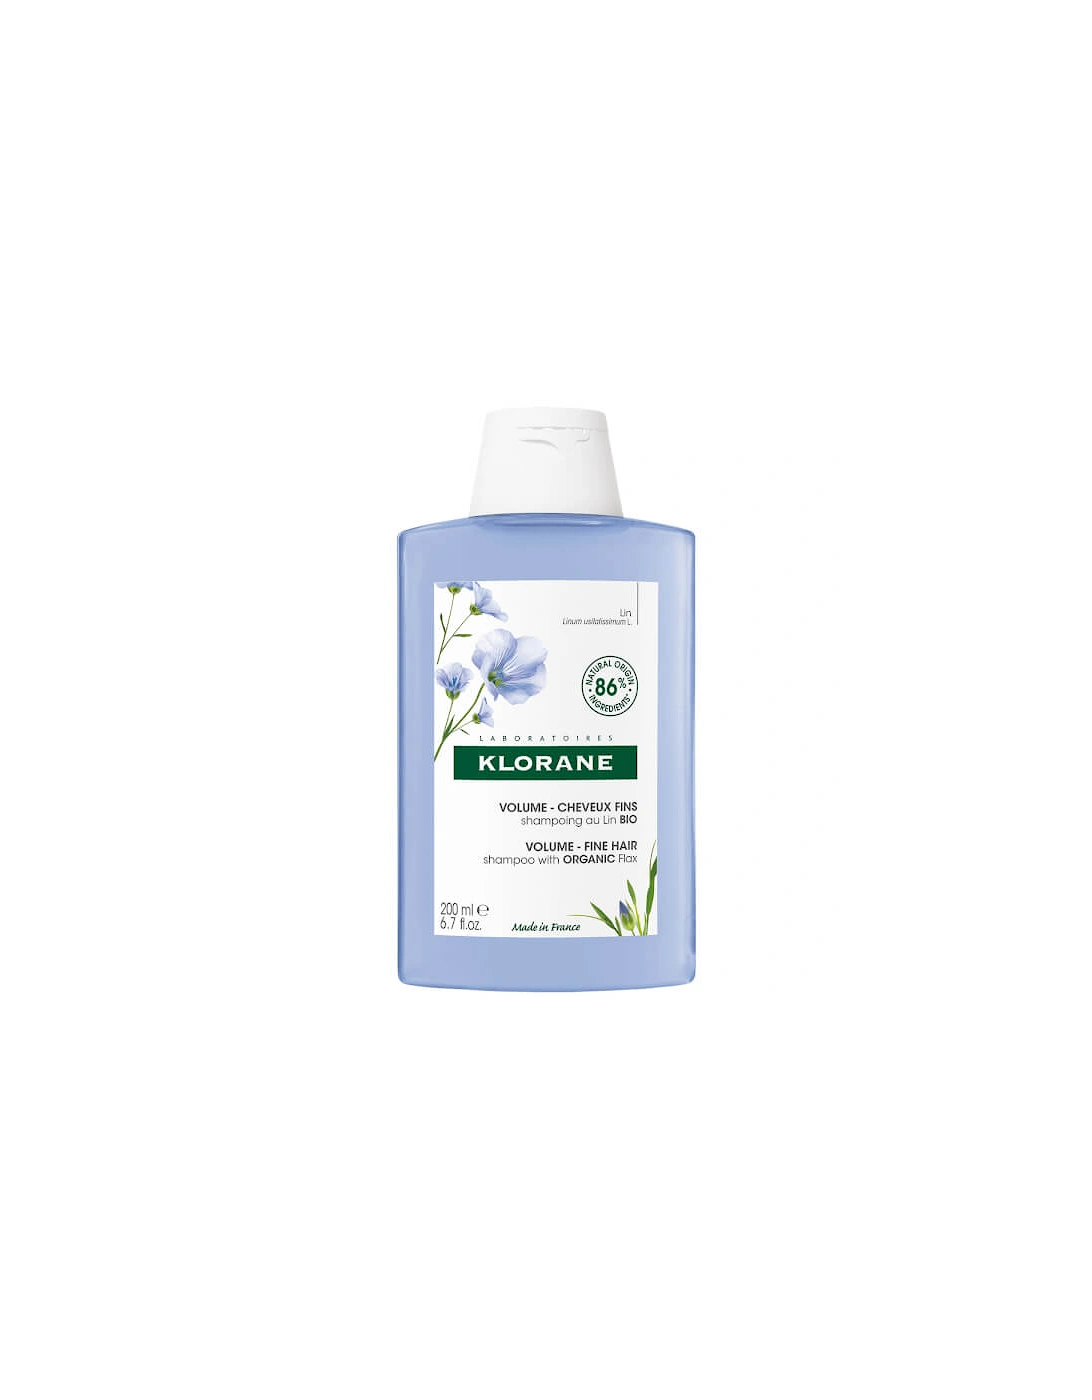 Volumising Shampoo with Organic Flax Fibre for Fine, Limp Hair 200ml - KLORANE, 2 of 1